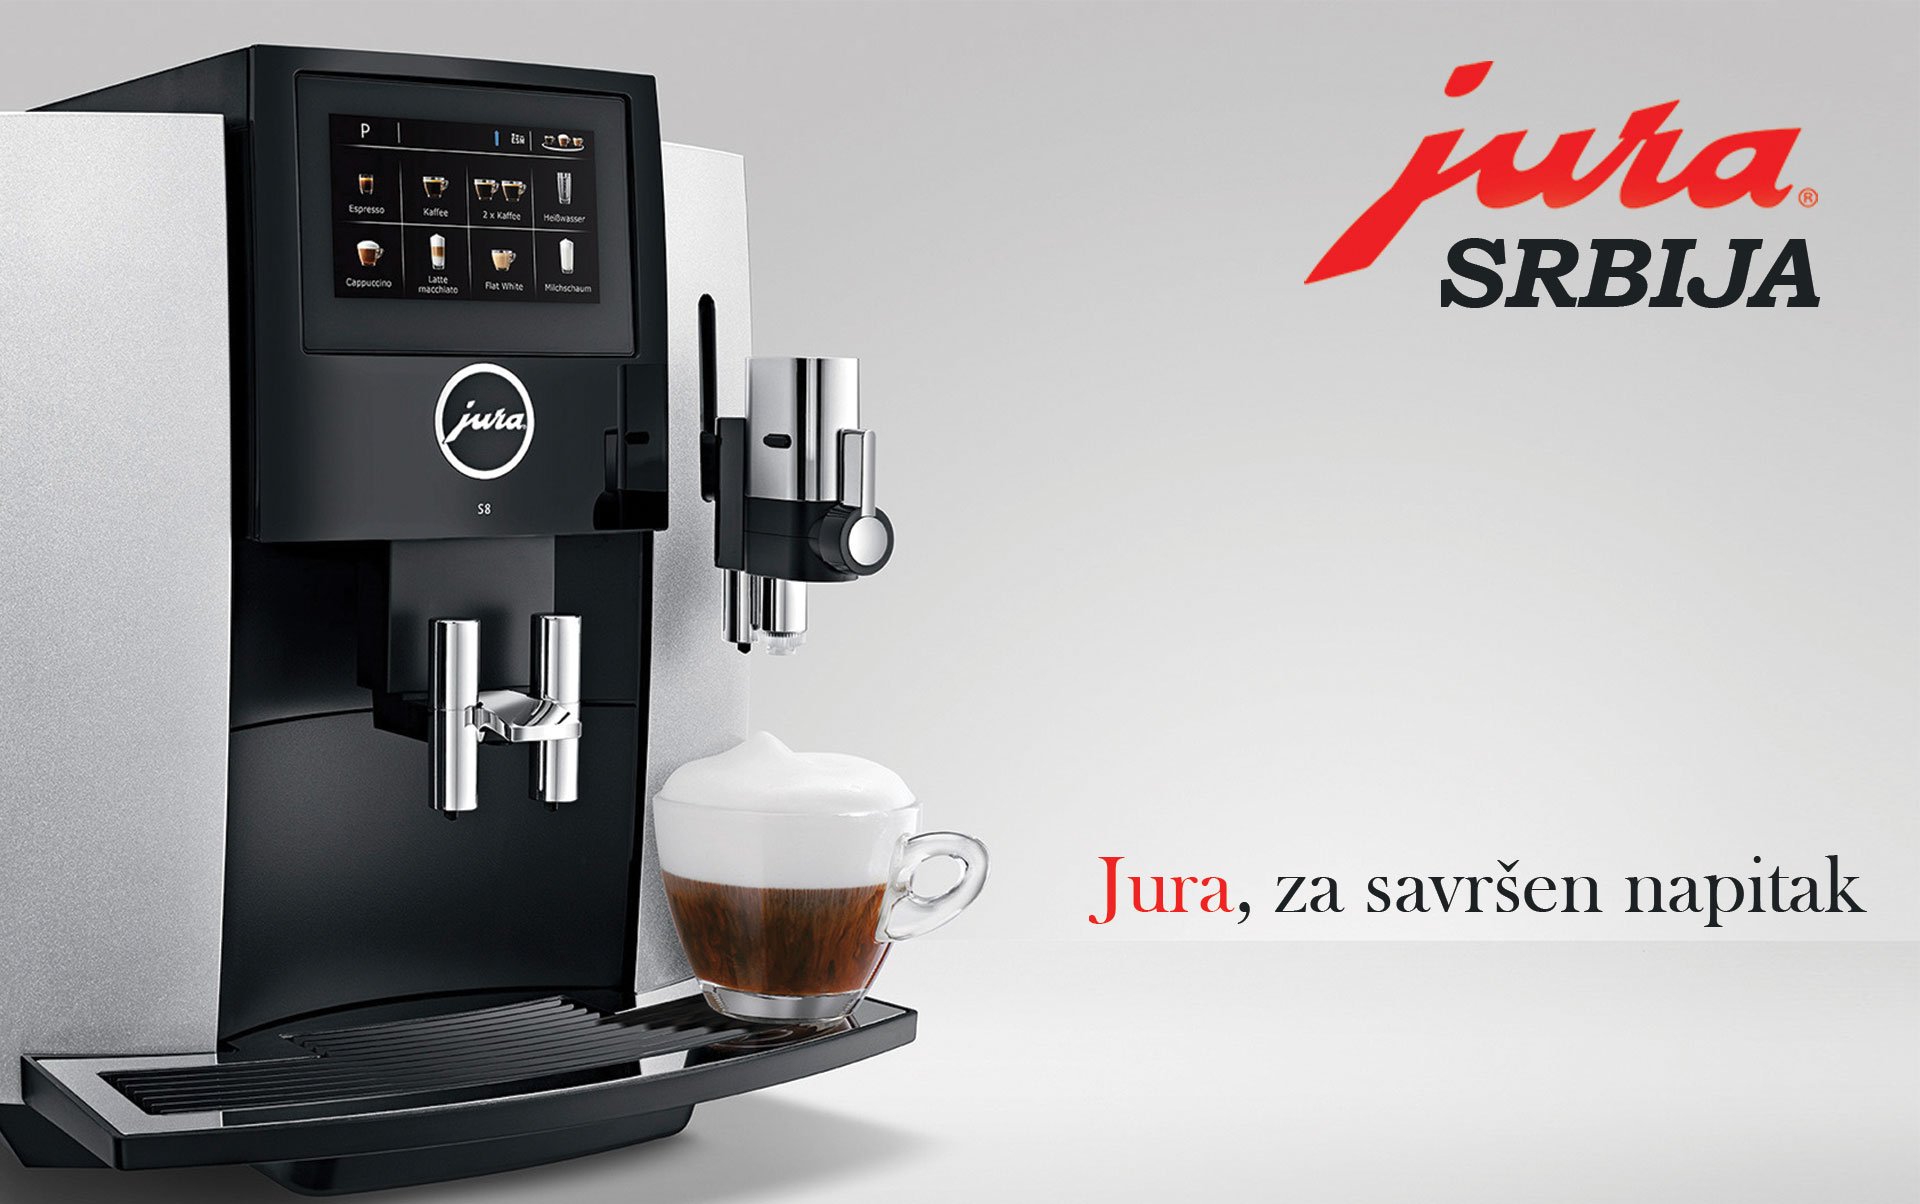 jura-srbija-prodaja-jura-espresso-aparata-4